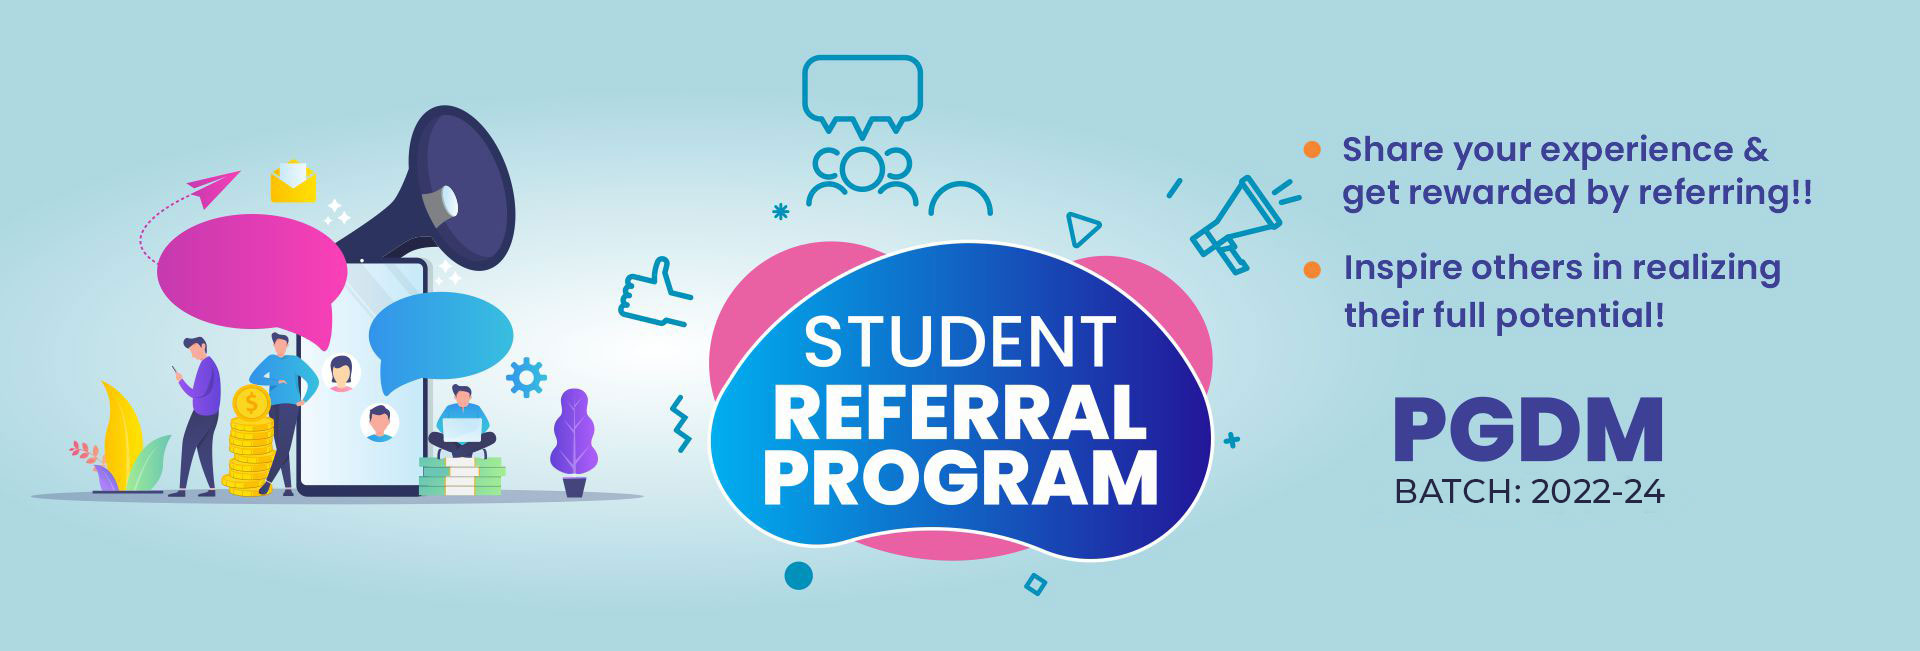 Student Referral Program